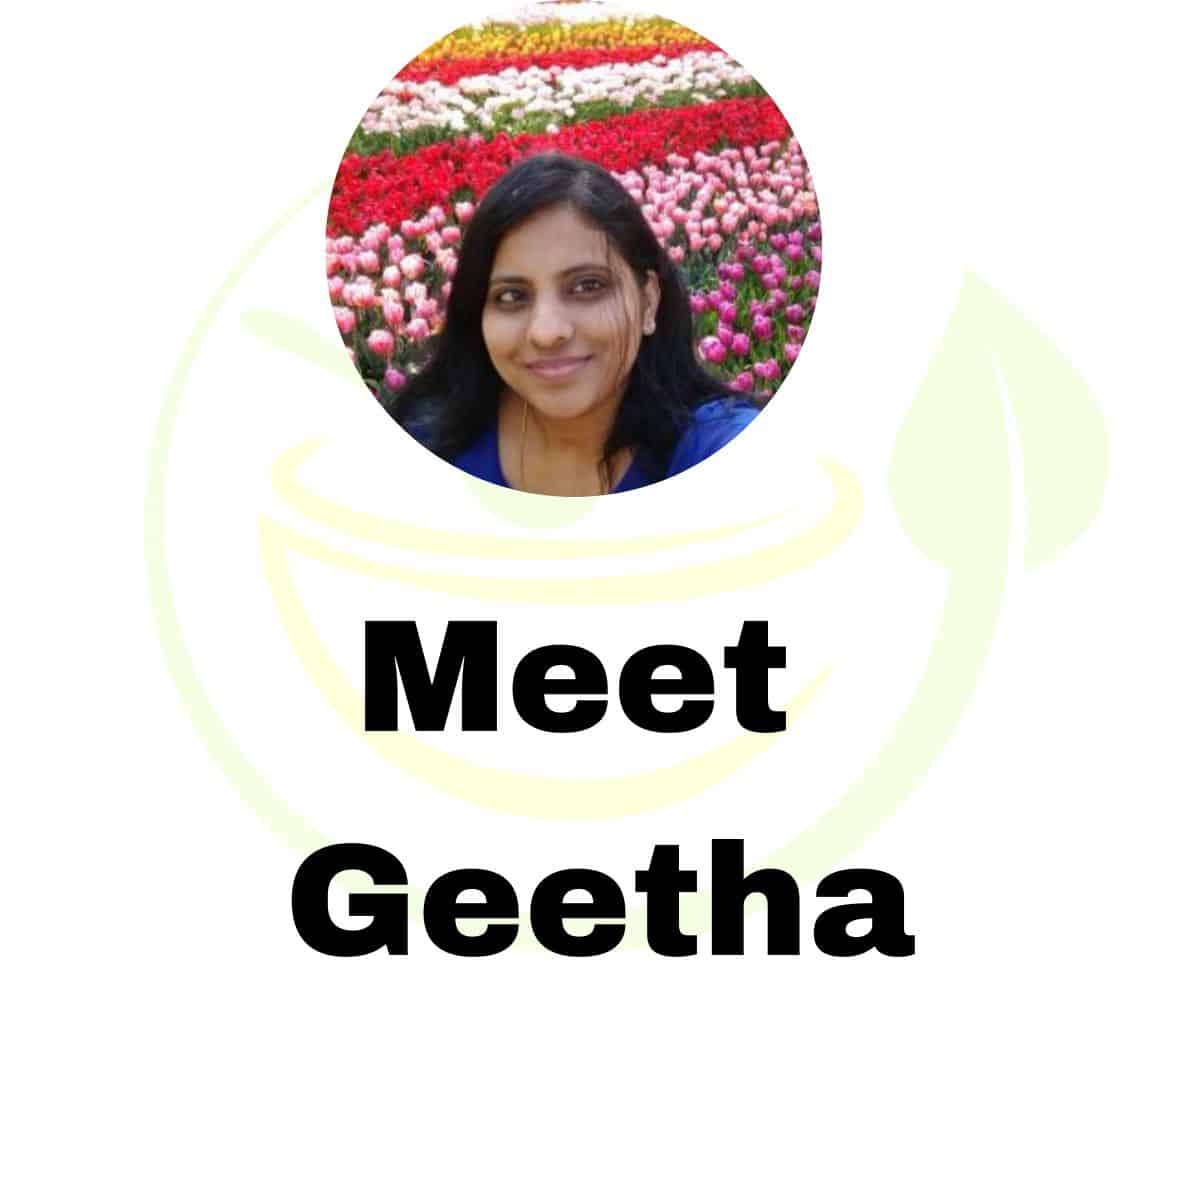 Image of Geetha with text below "Meet Geetha"